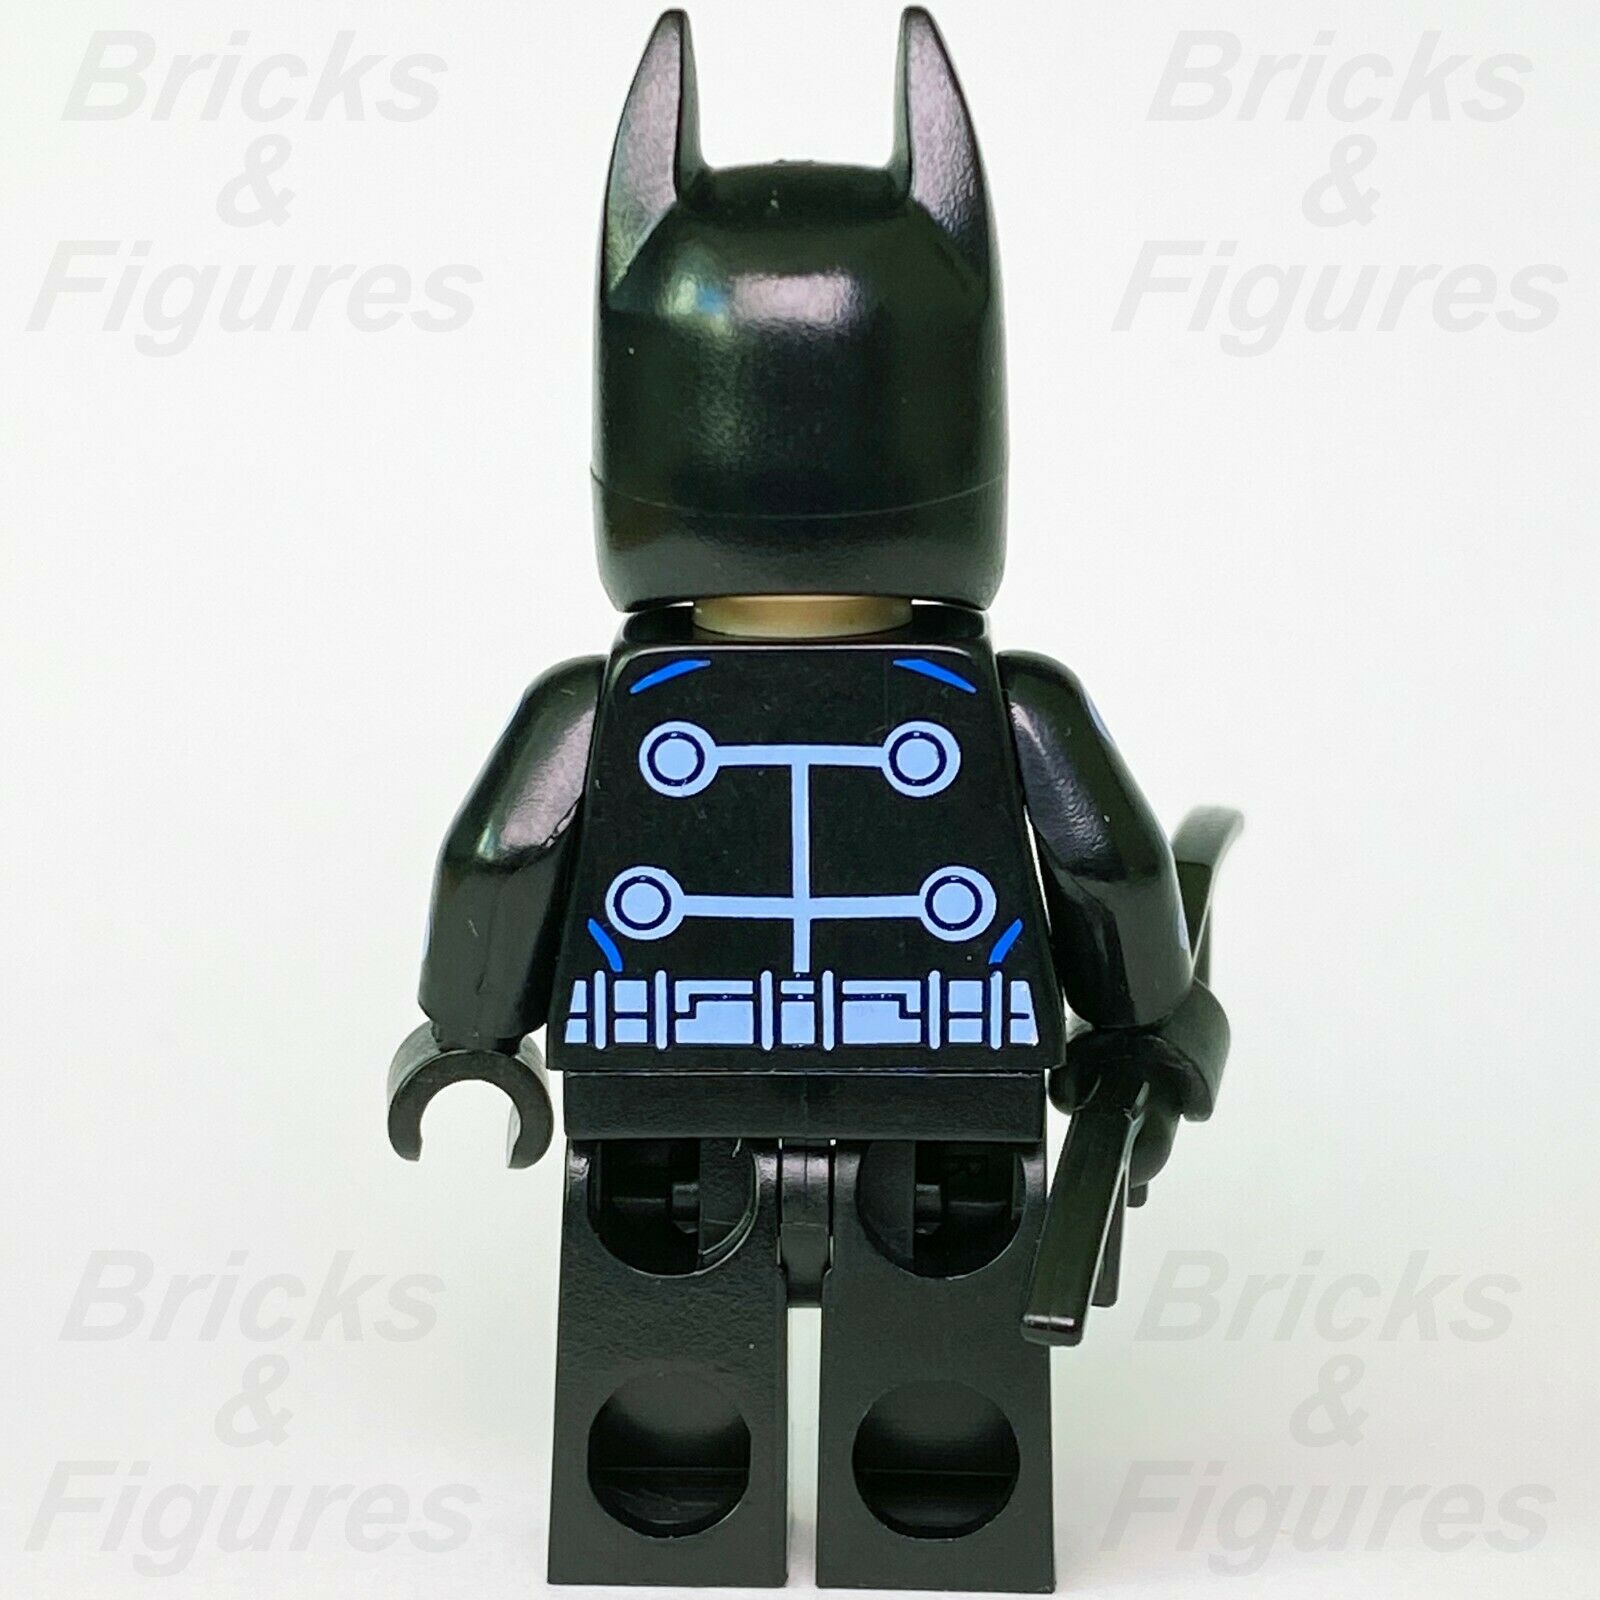 DC Super Heroes LEGO Batman 2 in Electro Suit Justice League Minifigure 5002889 - Bricks & Figures